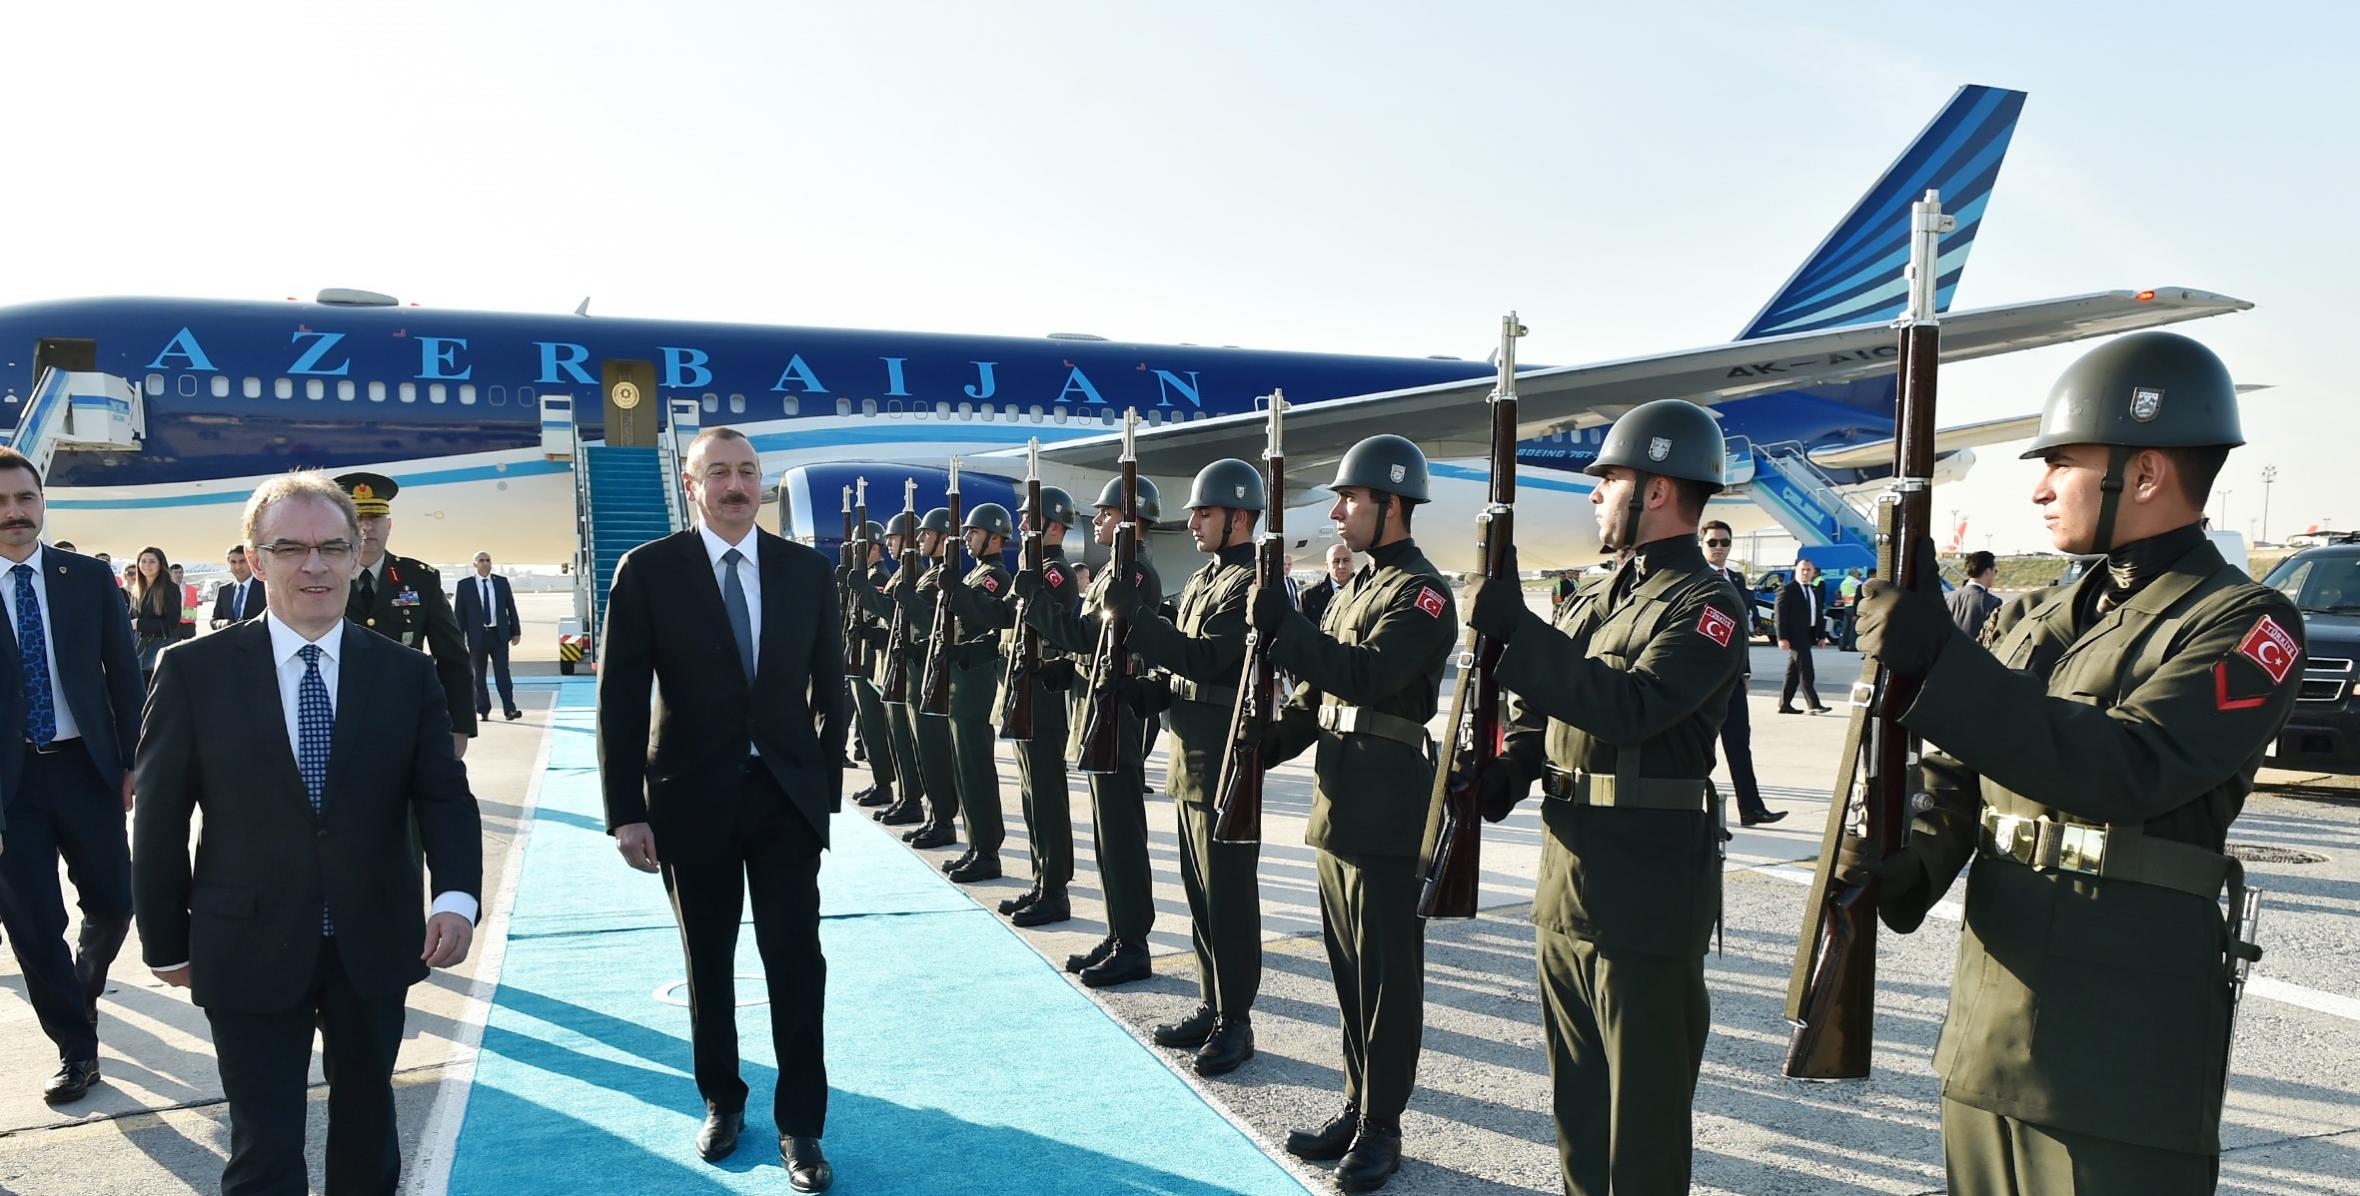 Ilham Aliyev arrived in Turkey for visit